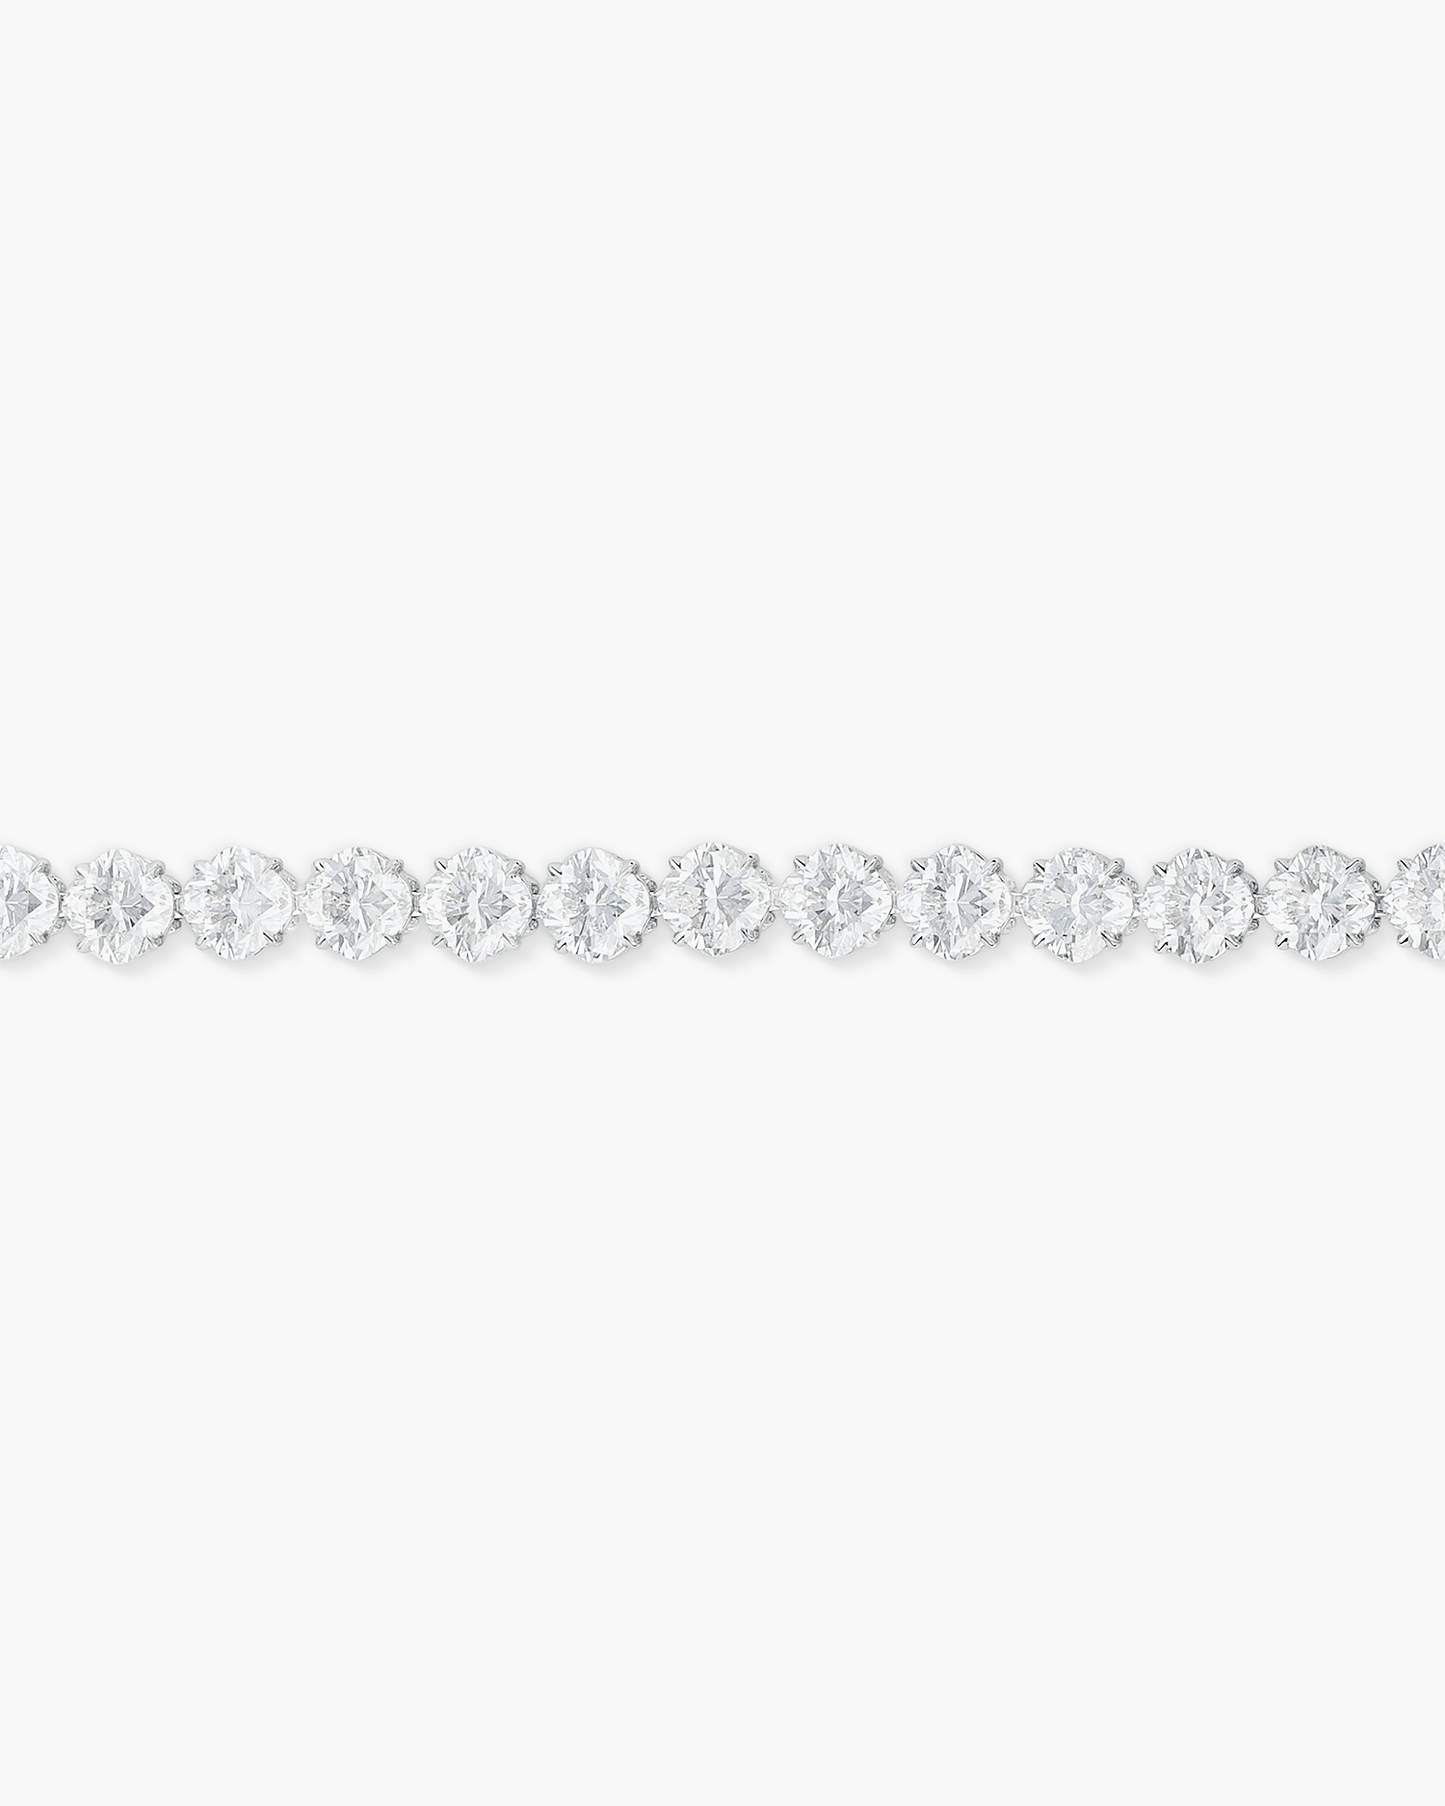 15.65 carat Cushion Cut Diamond Bracelet (0.50 carat)